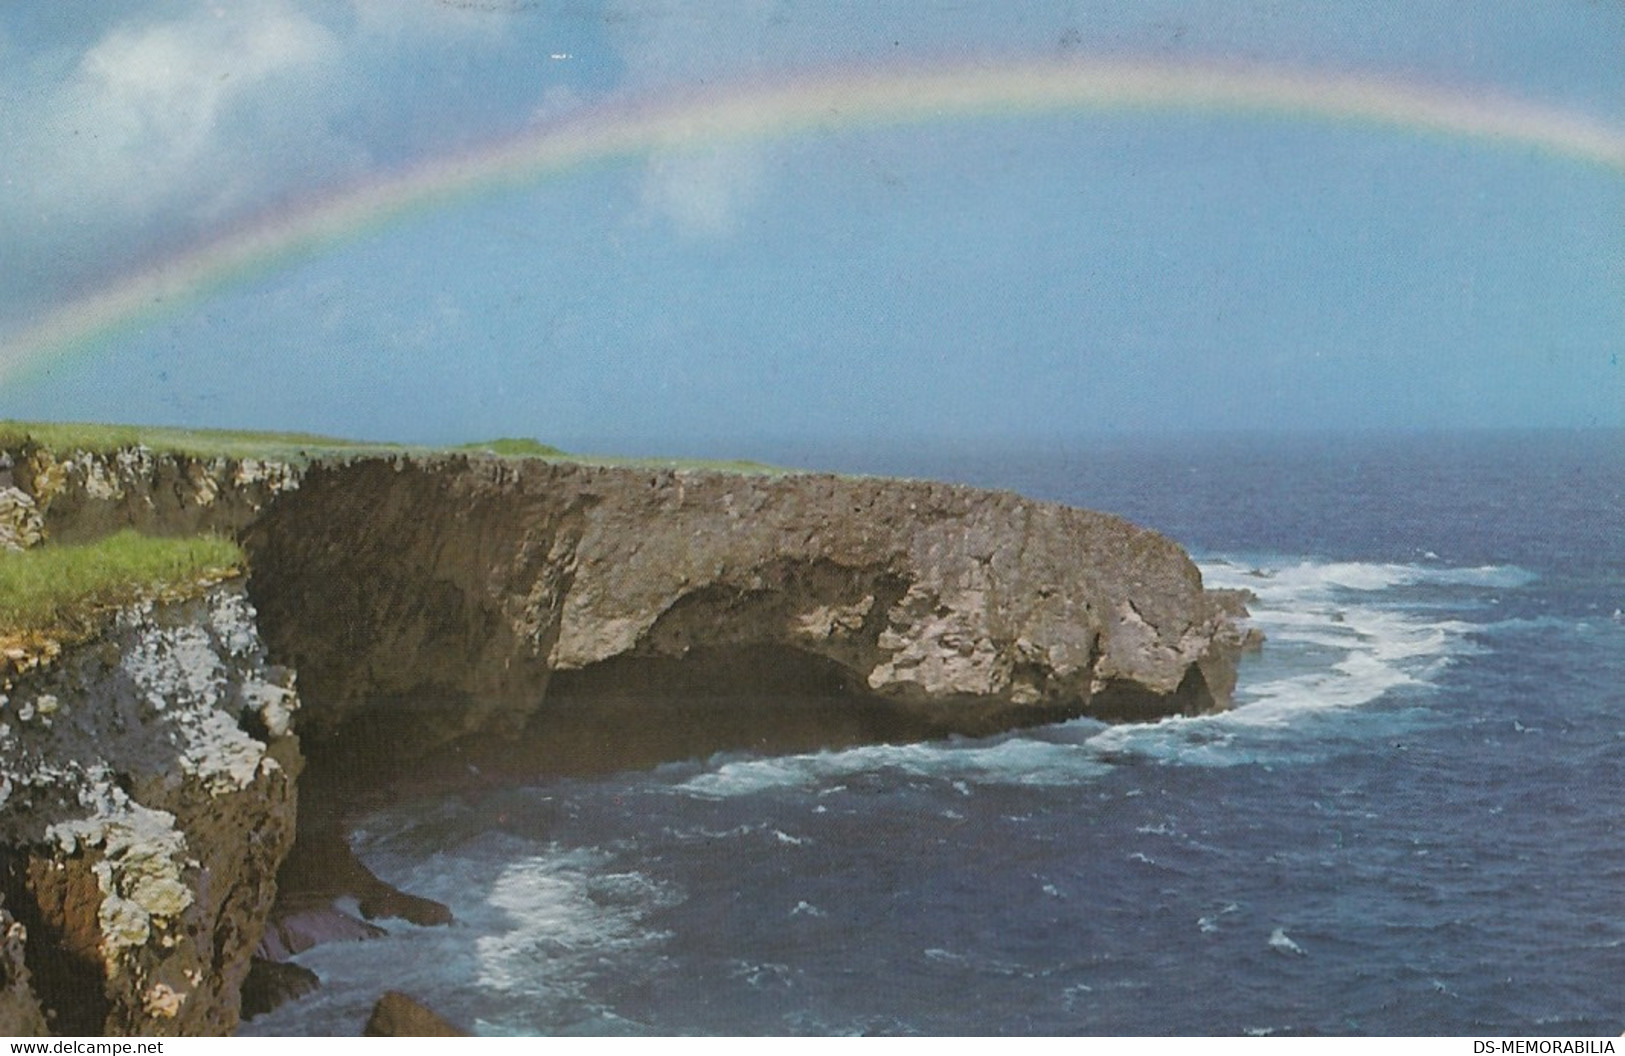 Guam - Rainbow Over The Banzai Cliff - Guam